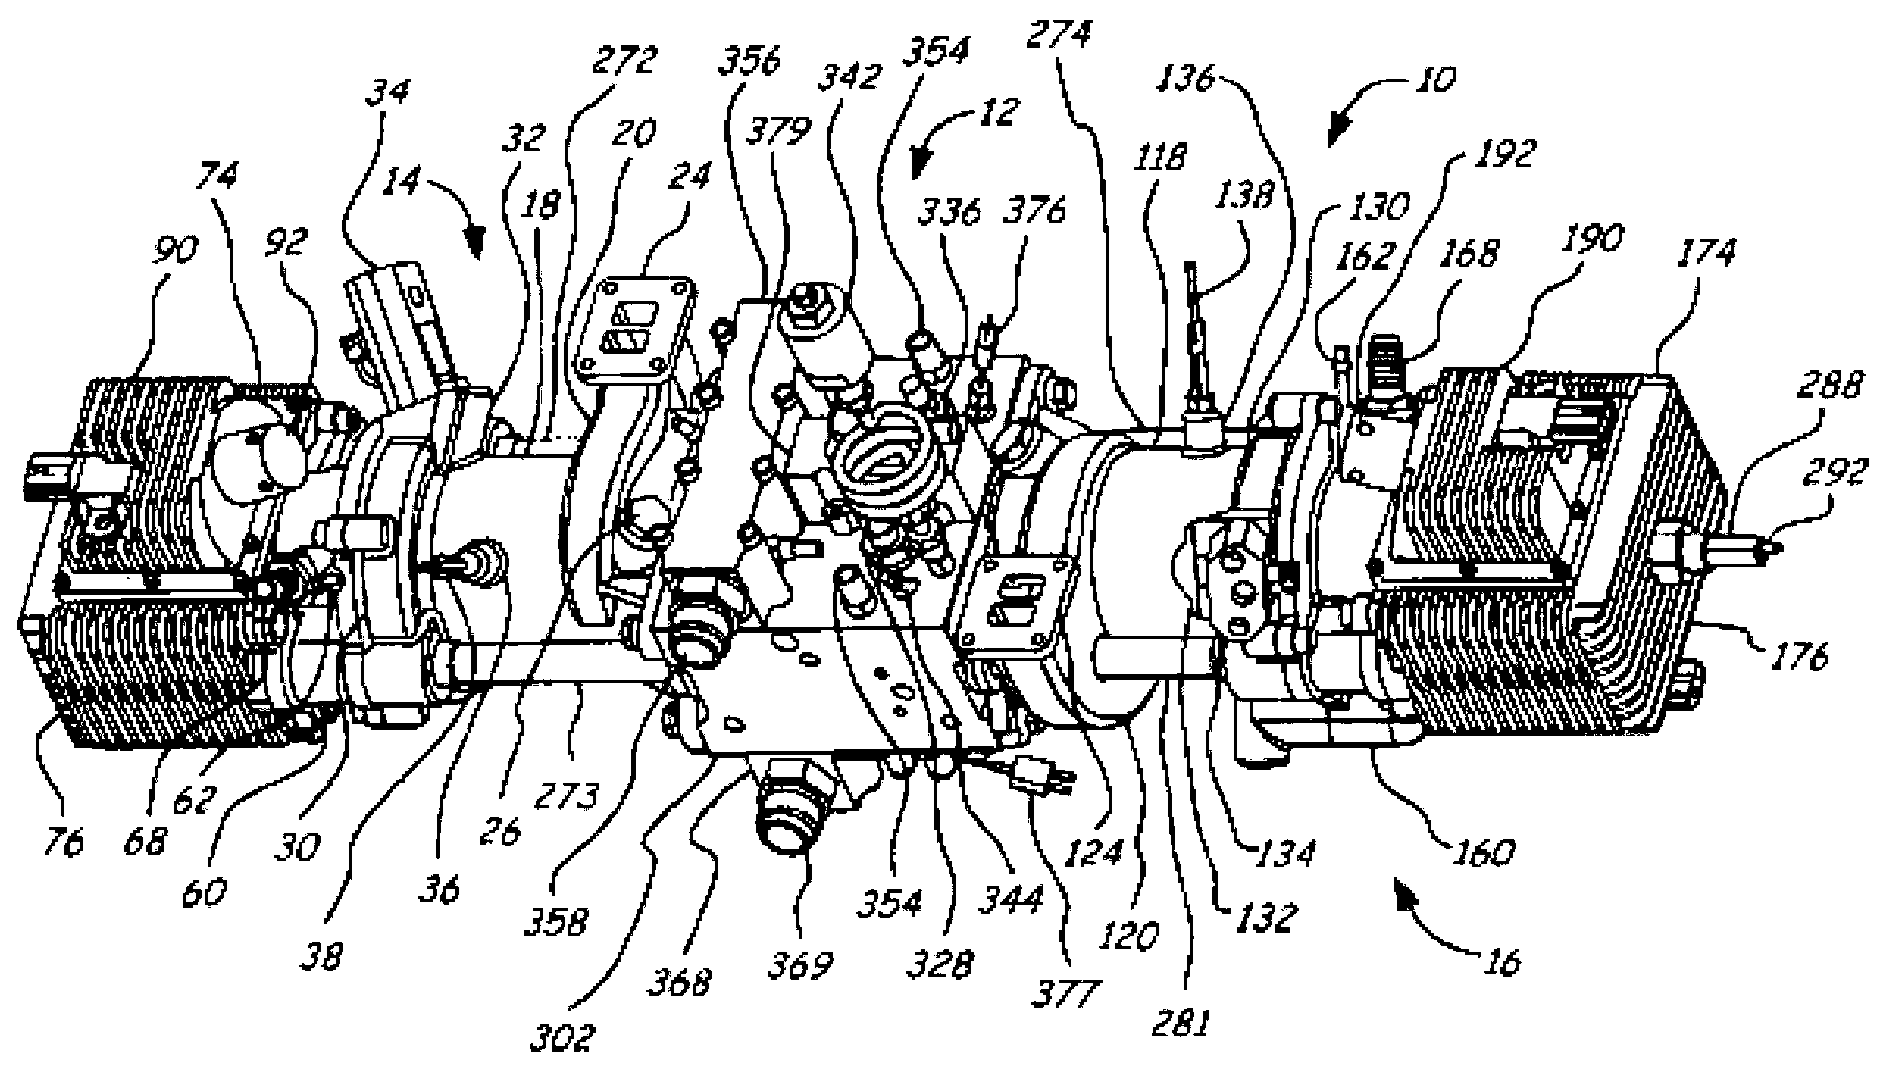 Free-piston engine